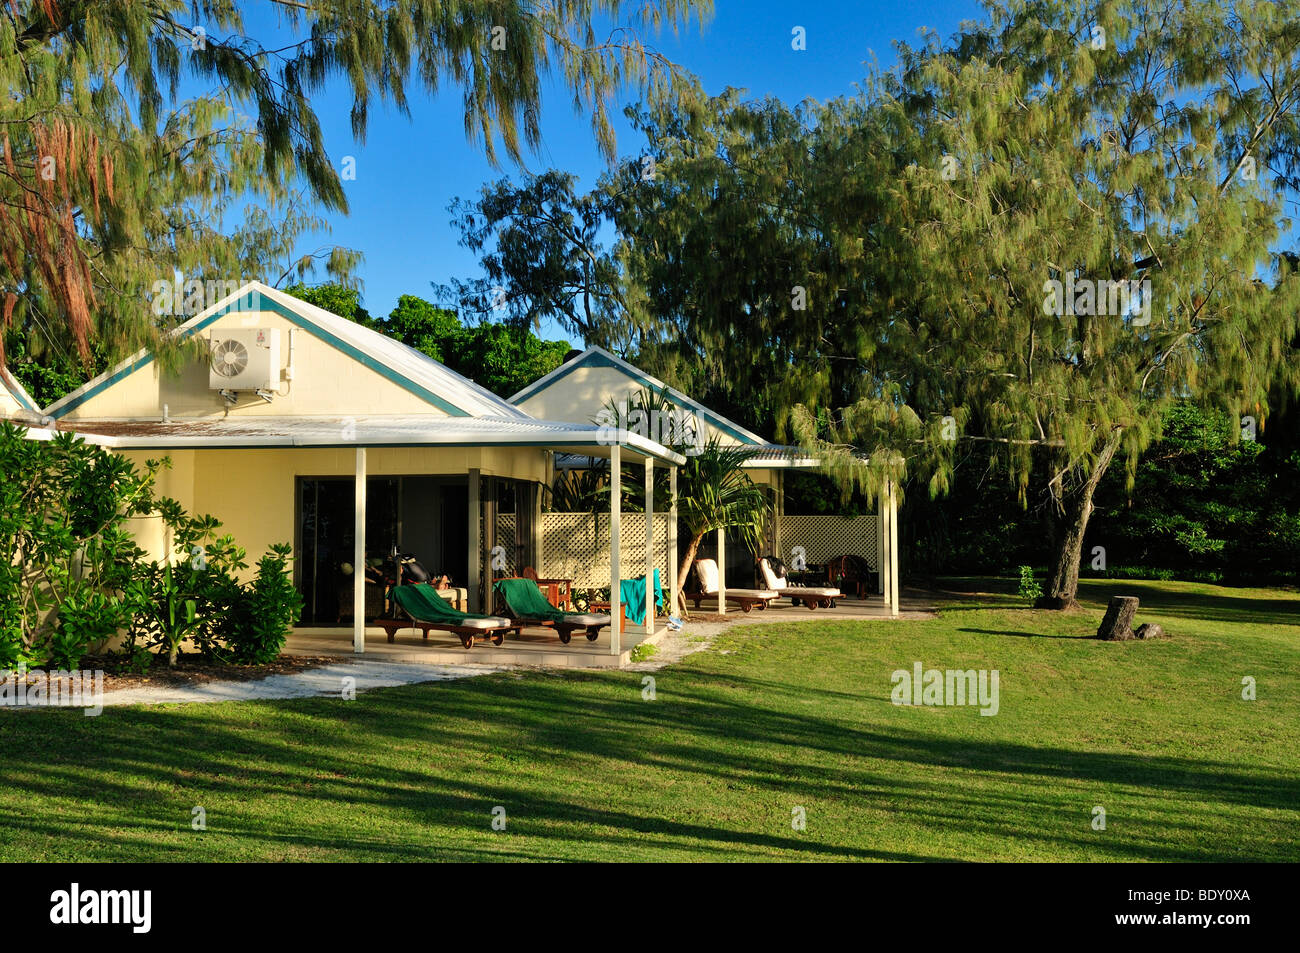 Tourist bungalow on Heron Island, Capricornia Cays National Park, Great Barrier Reef, Queensland, Australia Stock Photo